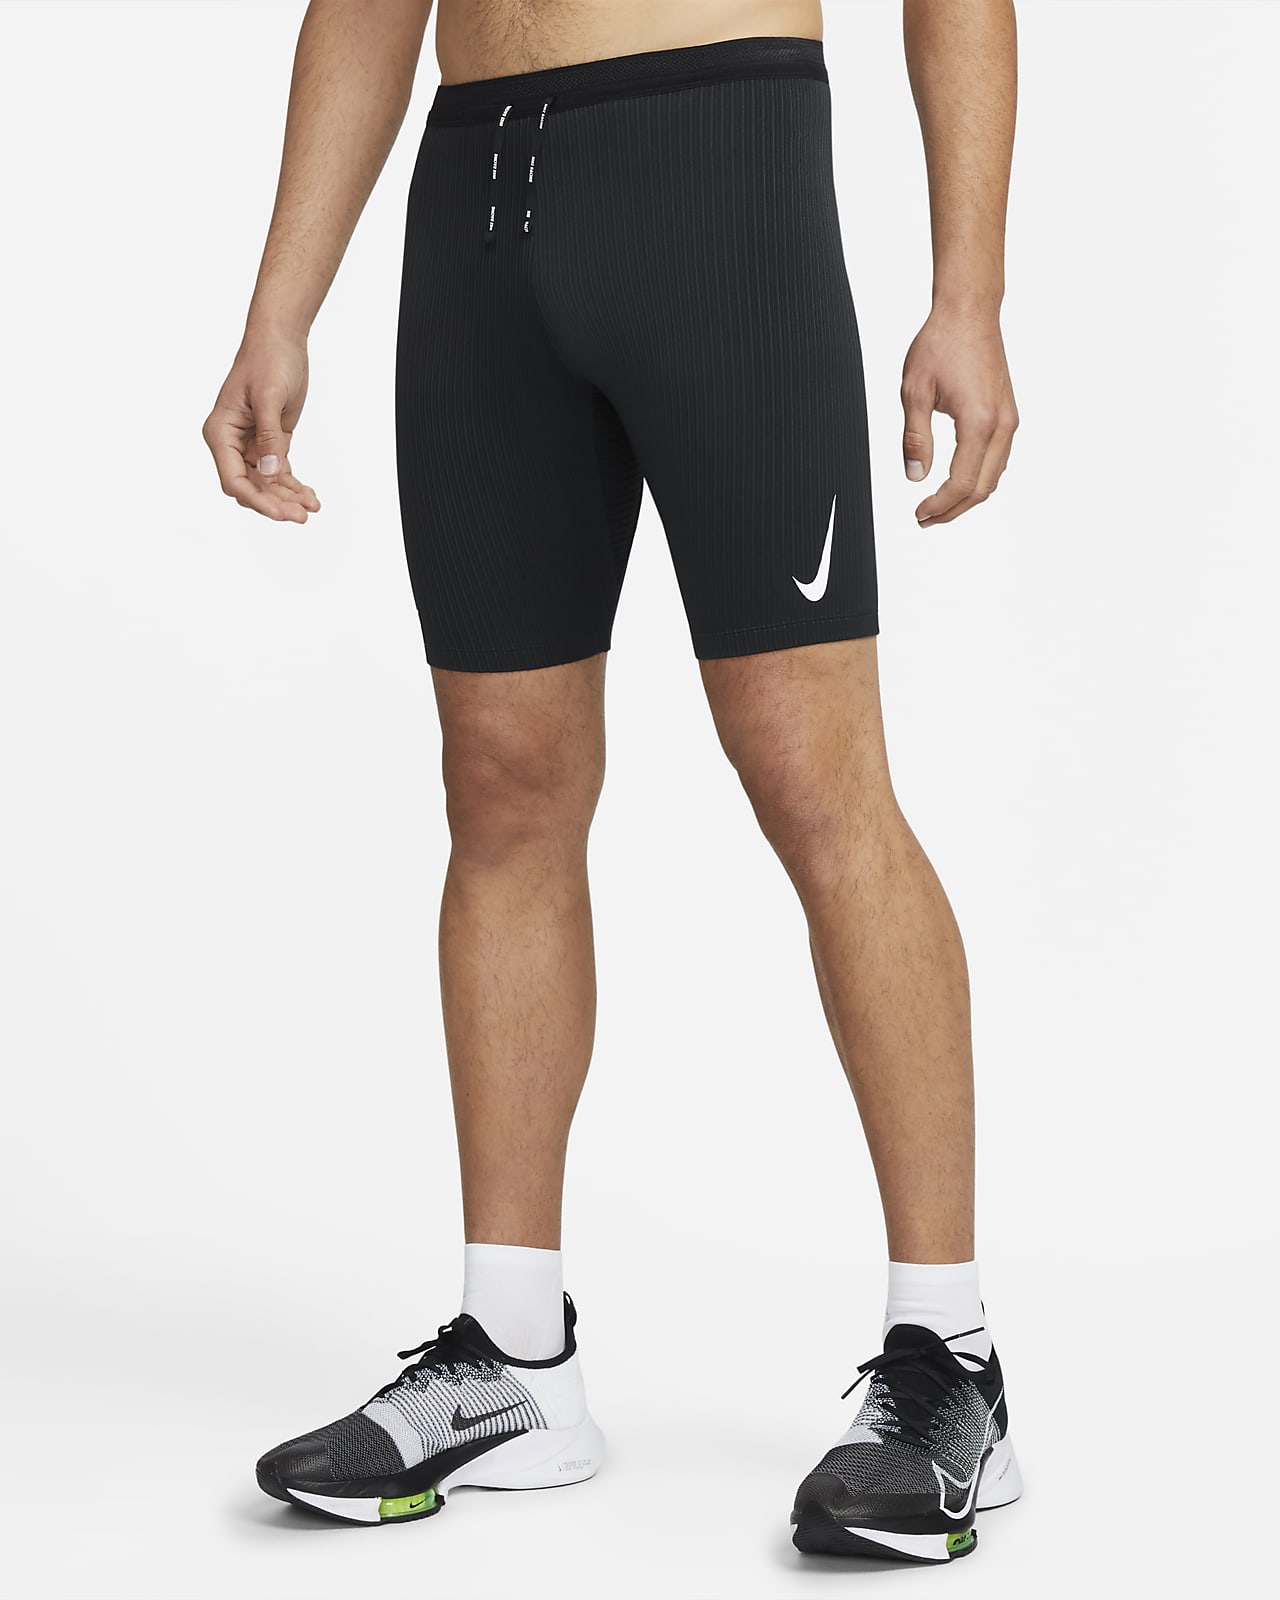 Nike Jordan Compression Shorts Men's Navy Used M